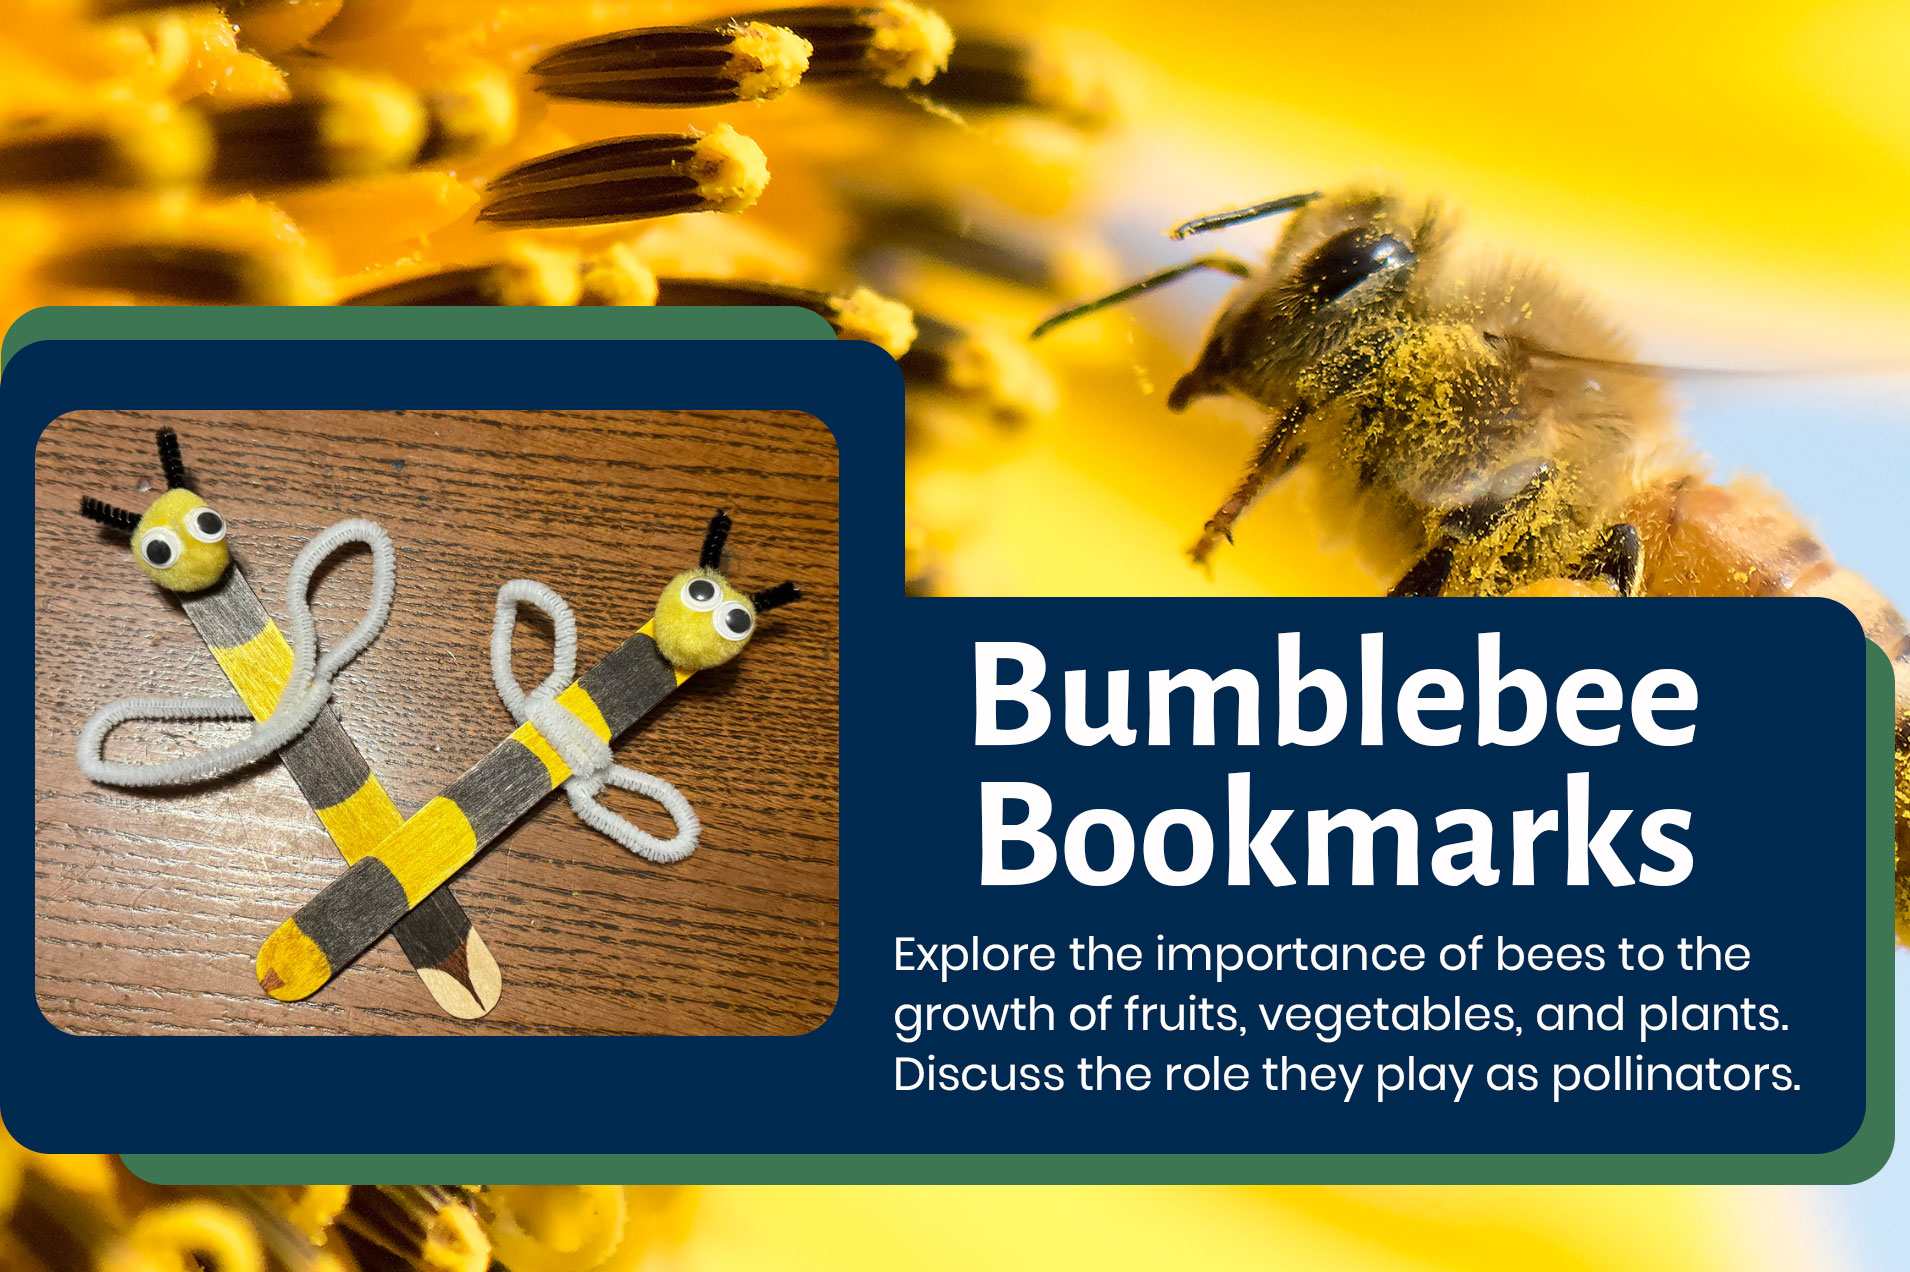 Bumblebee Bookmarks